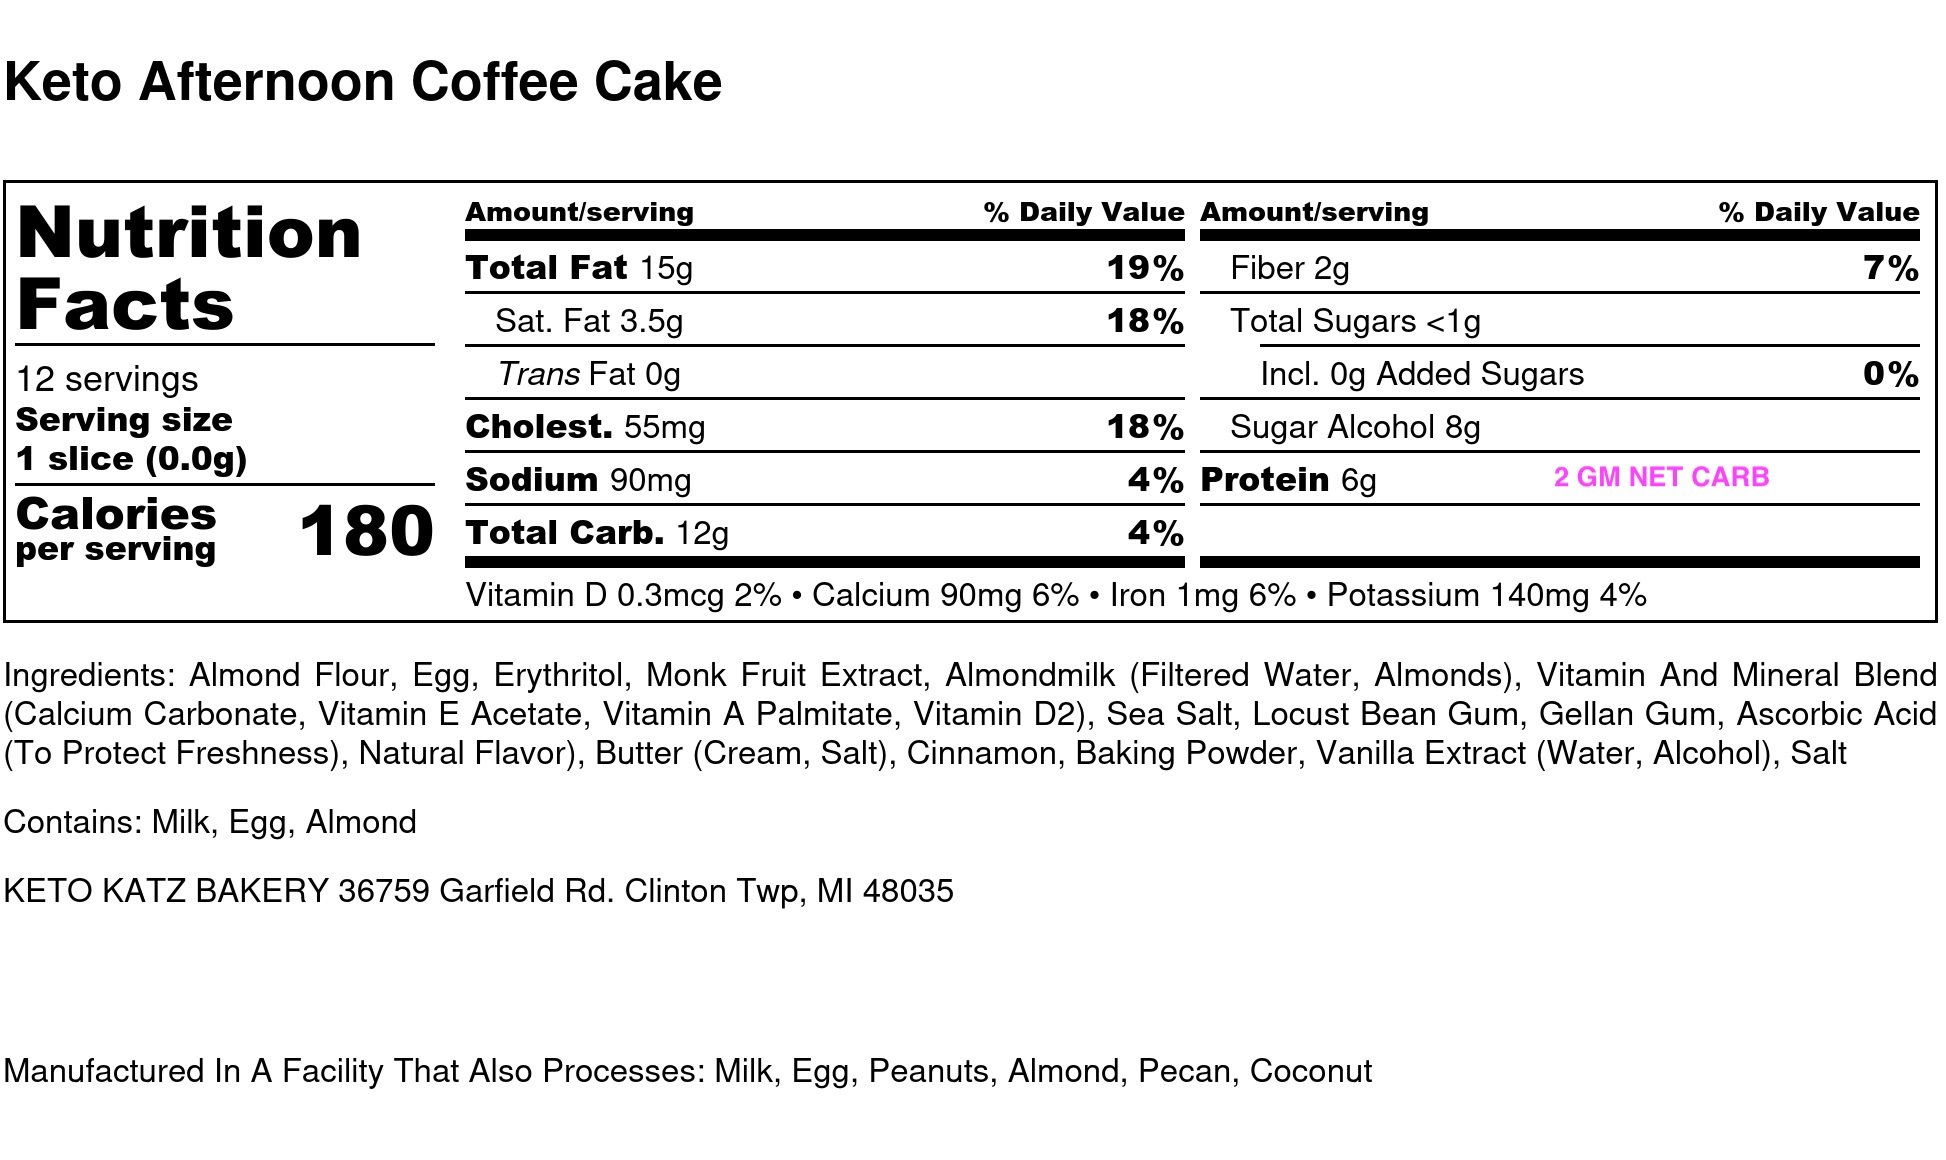 Keto Afternoon Coffee Cake - Nutrition Label.jpg